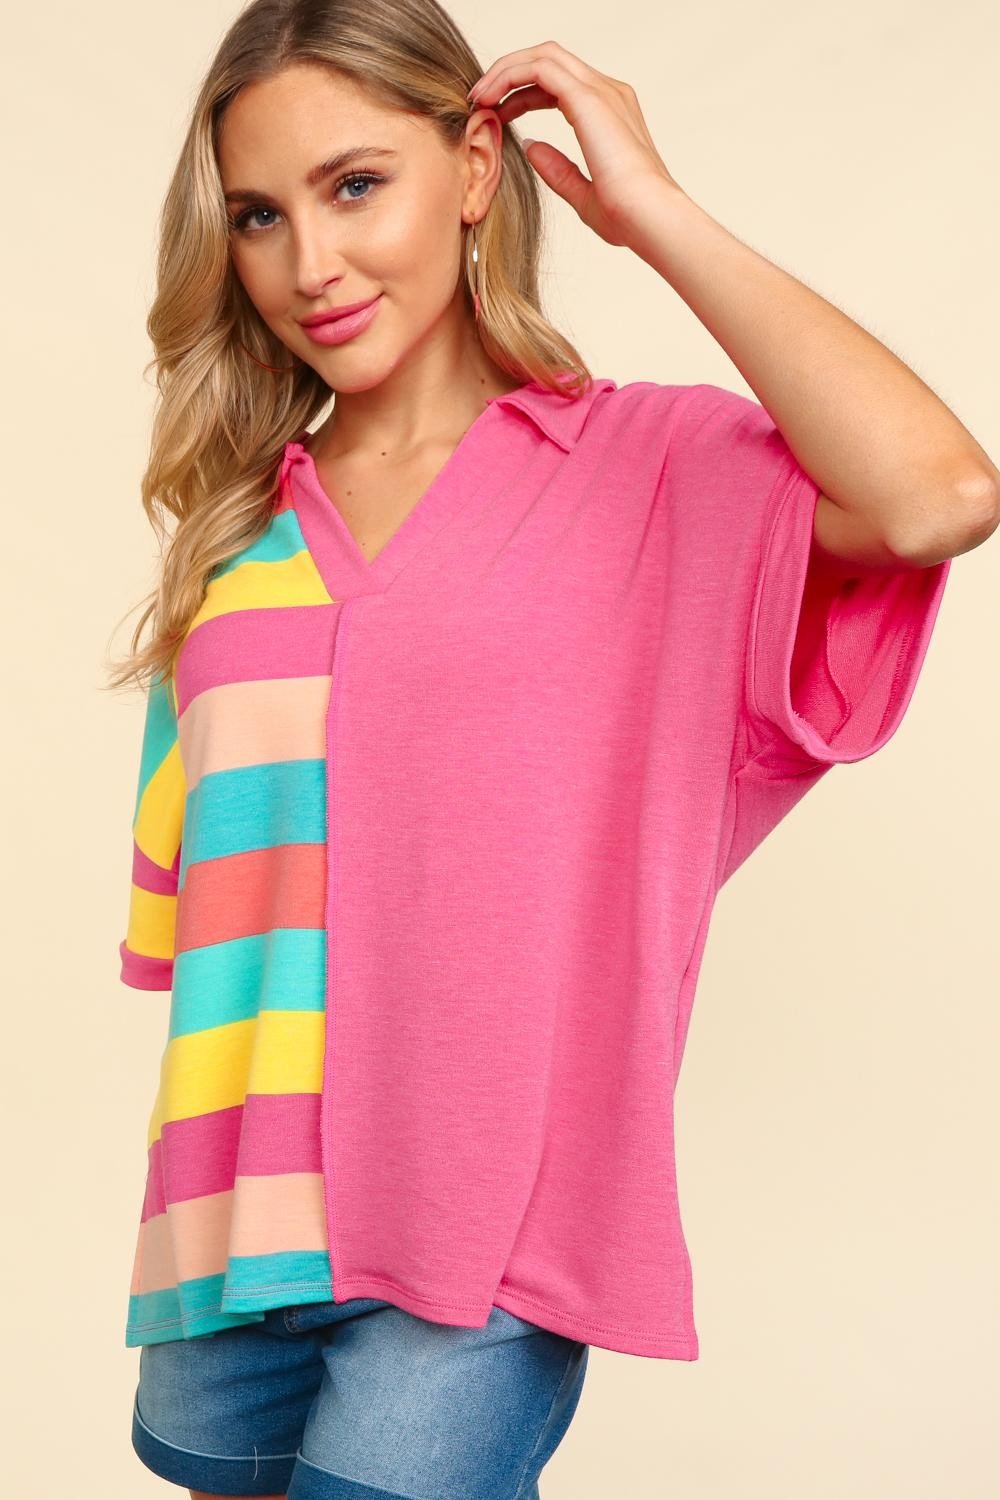 Exposed Seam Short Sleeve Half Striped T-Shirt in Hot PinkT-ShirtHaptics